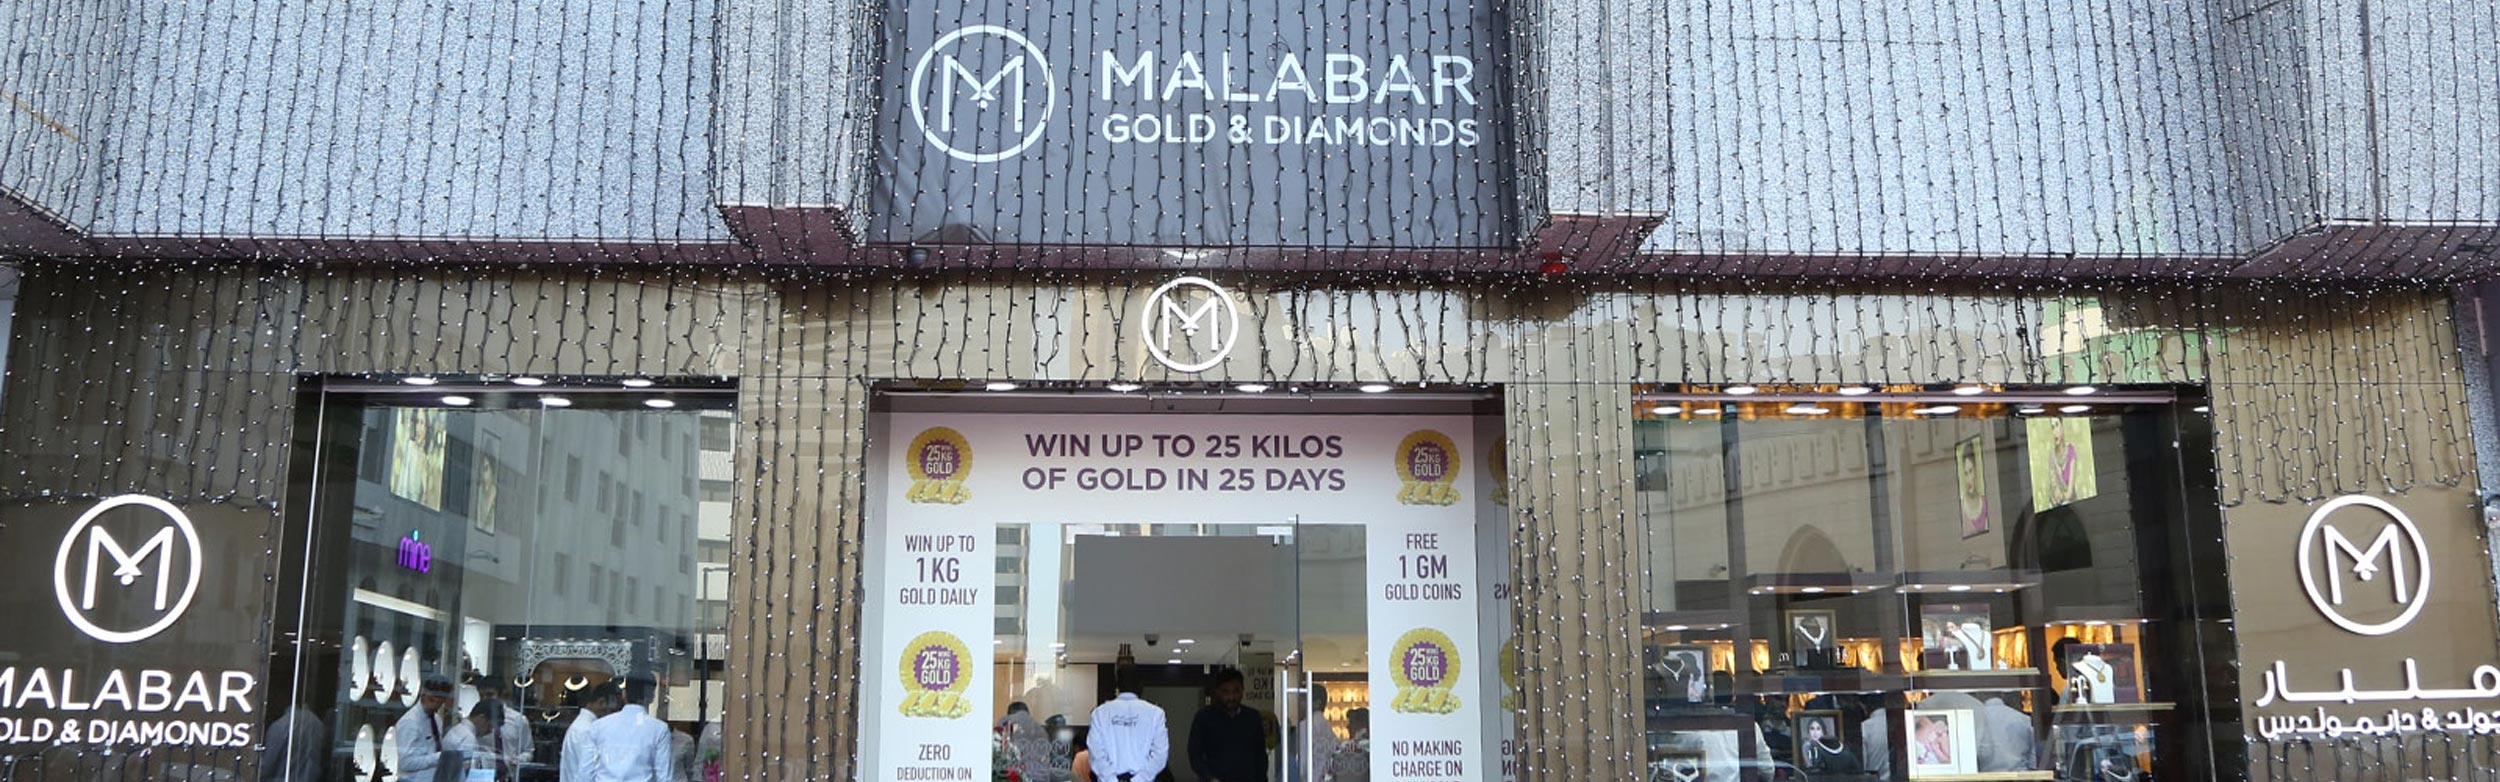 Malabar Gold & Diamonds Stores in Hamdan, Hamdanstreet